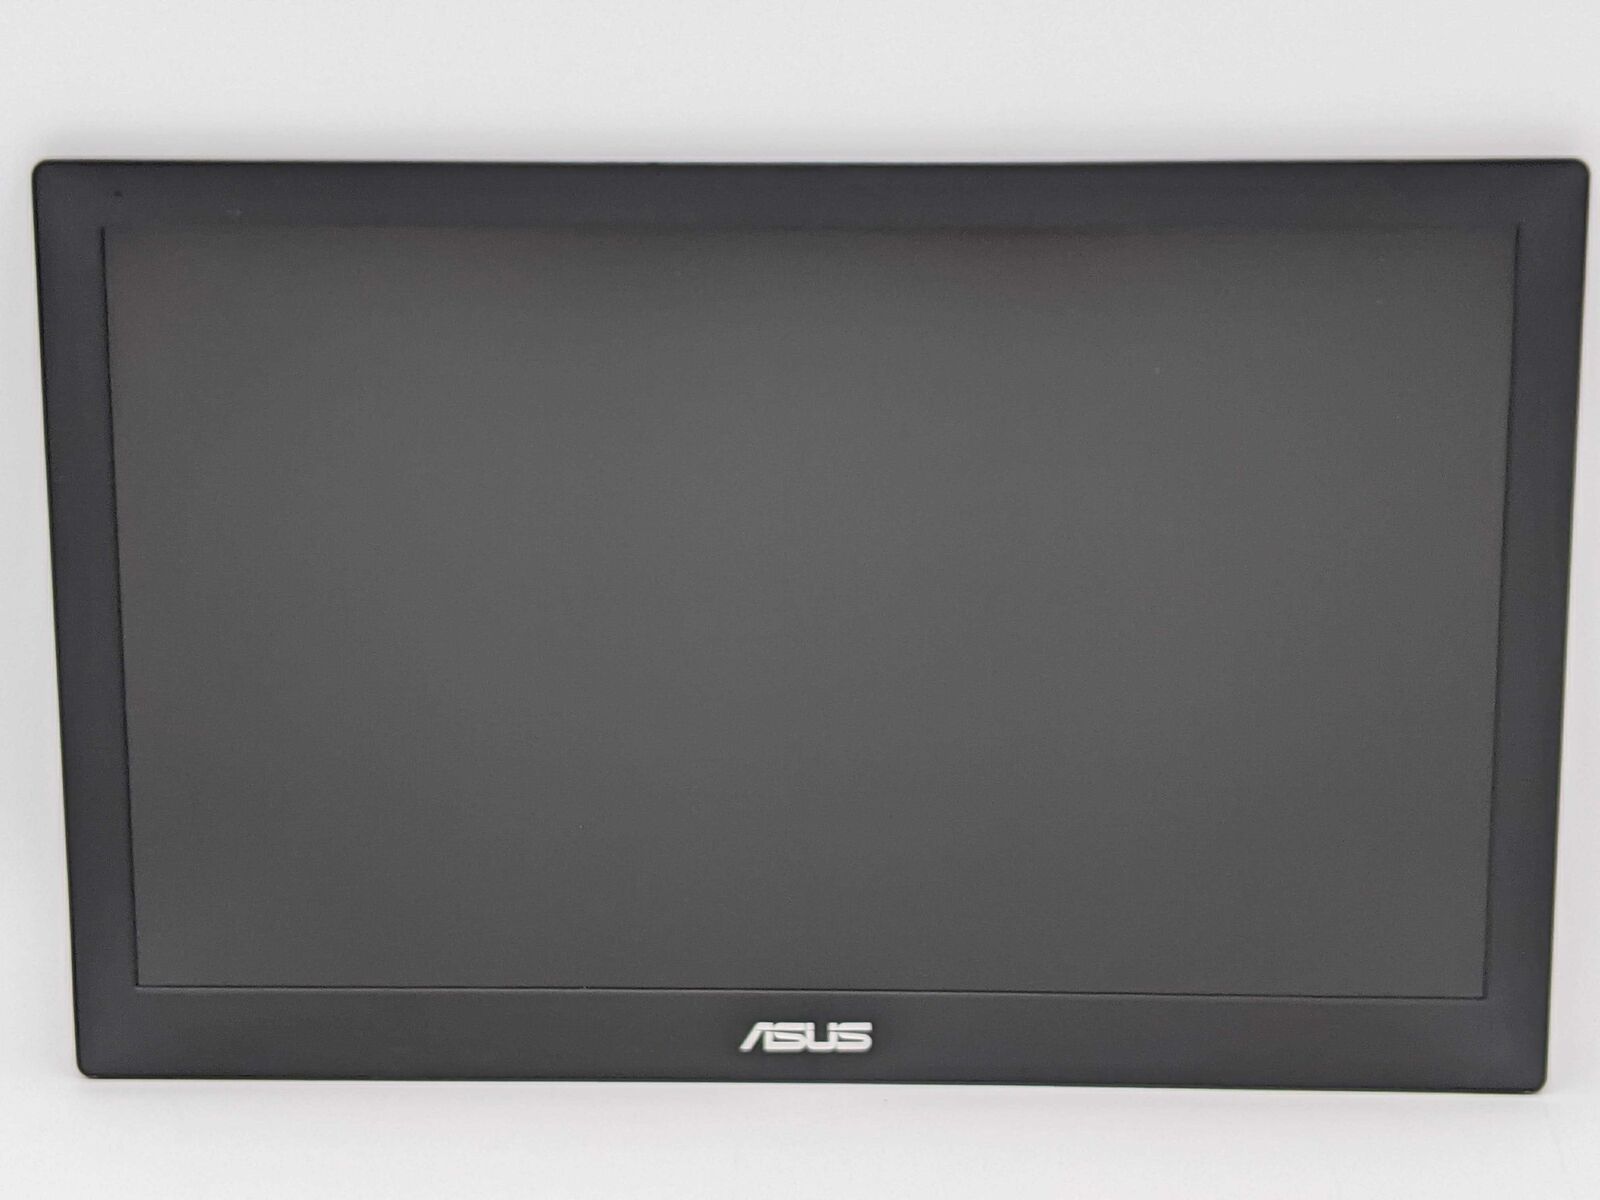 ASUS MB MB169B+ 15.6 inch FHD 1920x1080 USB Widescreen Portable LCD Monitor EX++